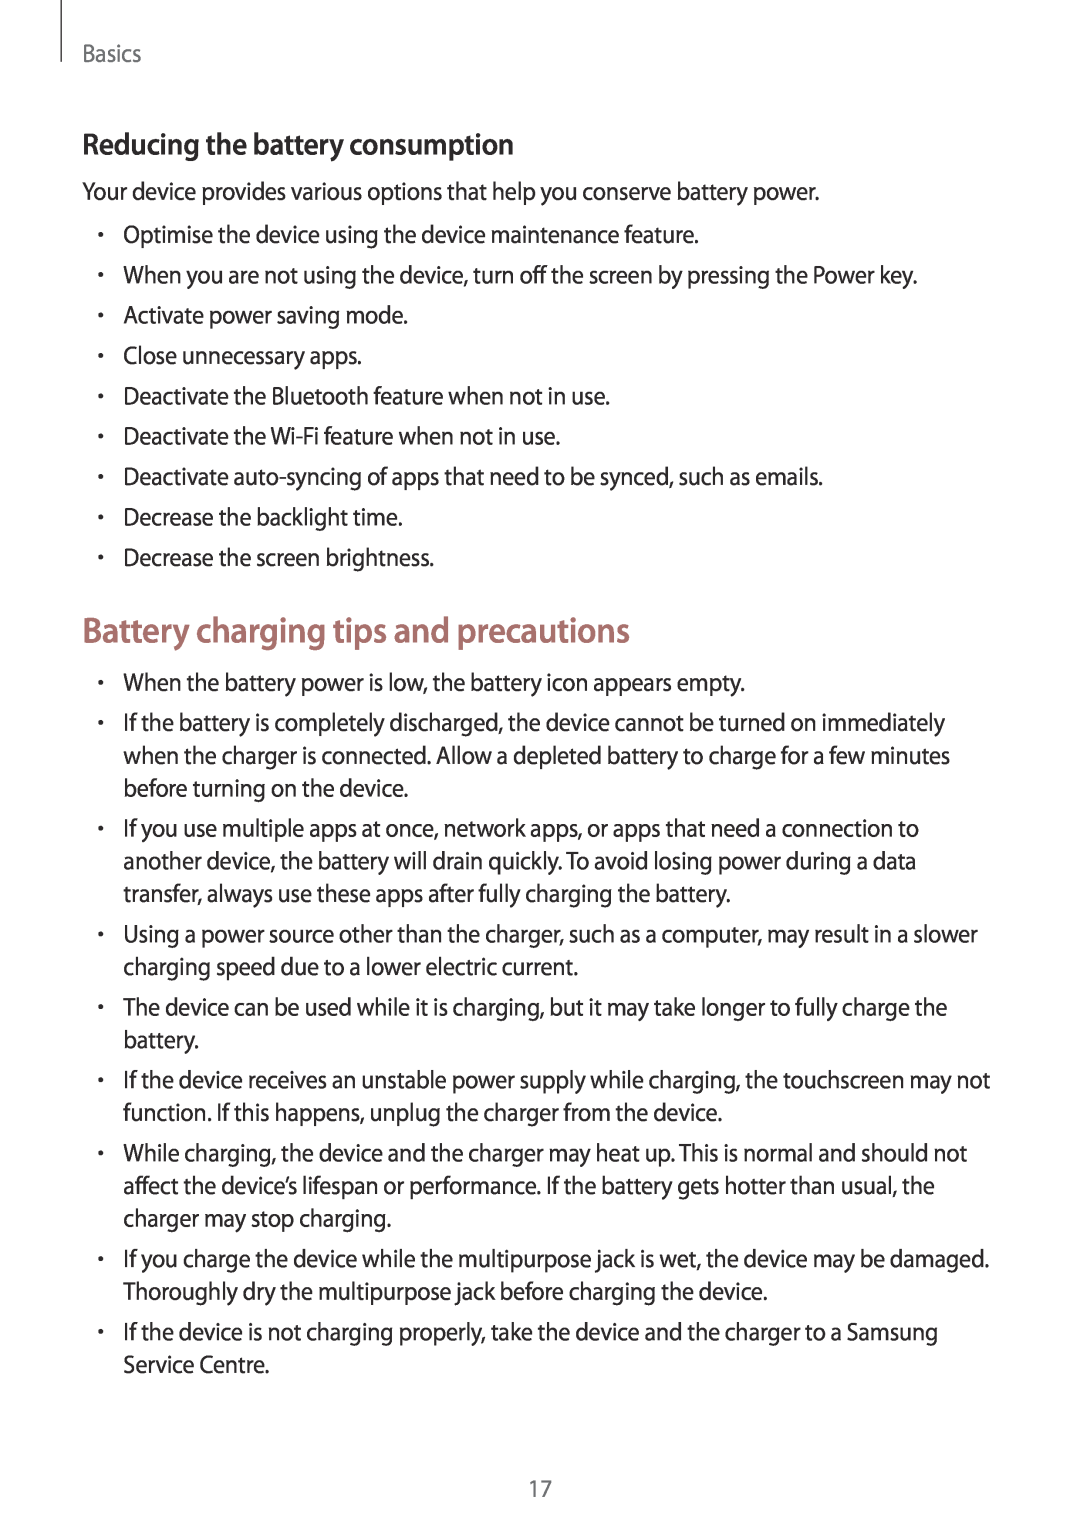 Samsung SM-A320FZBNITV, SM-A520FZIADBT Battery charging tips and precautions, Reducing the battery consumption, Basics 